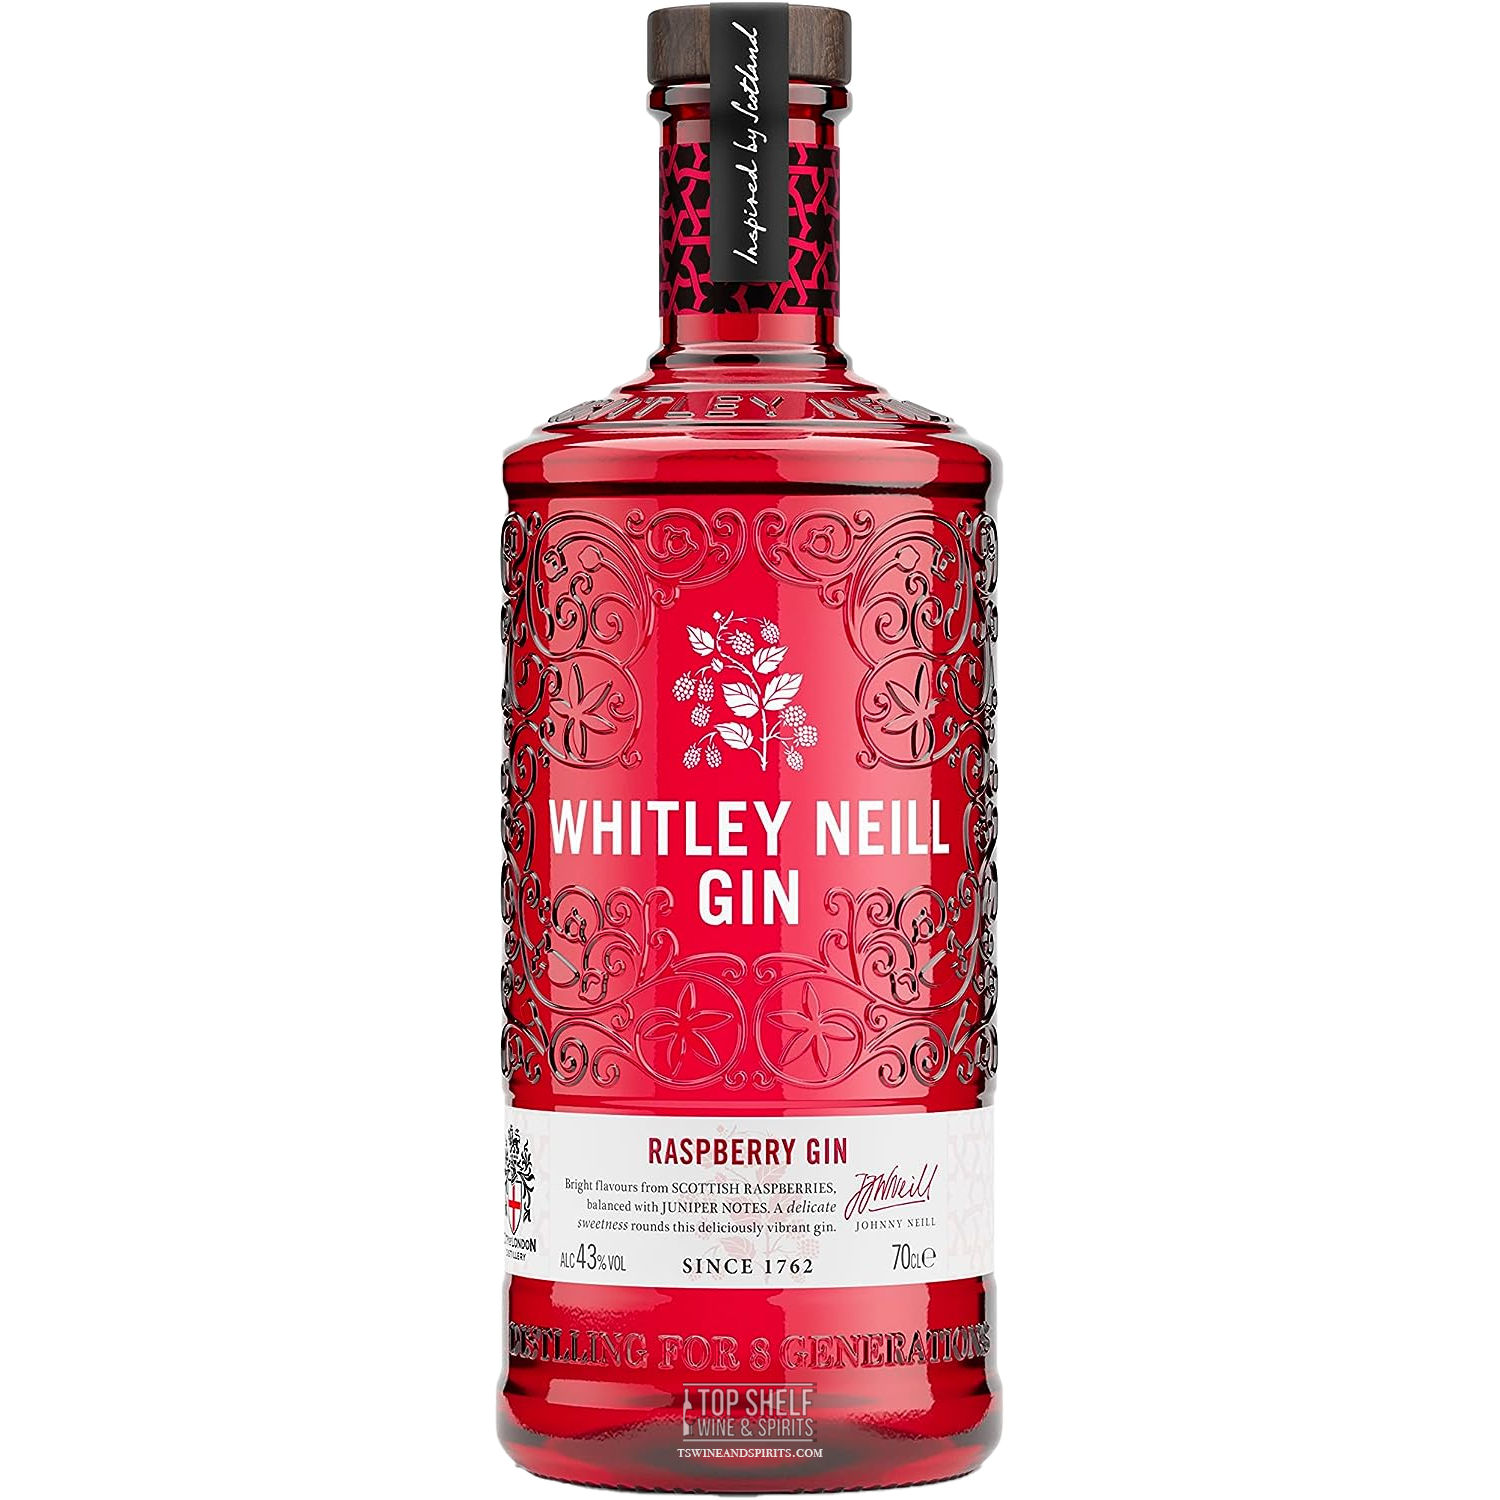 Whitley Neill Raspberry London Gin